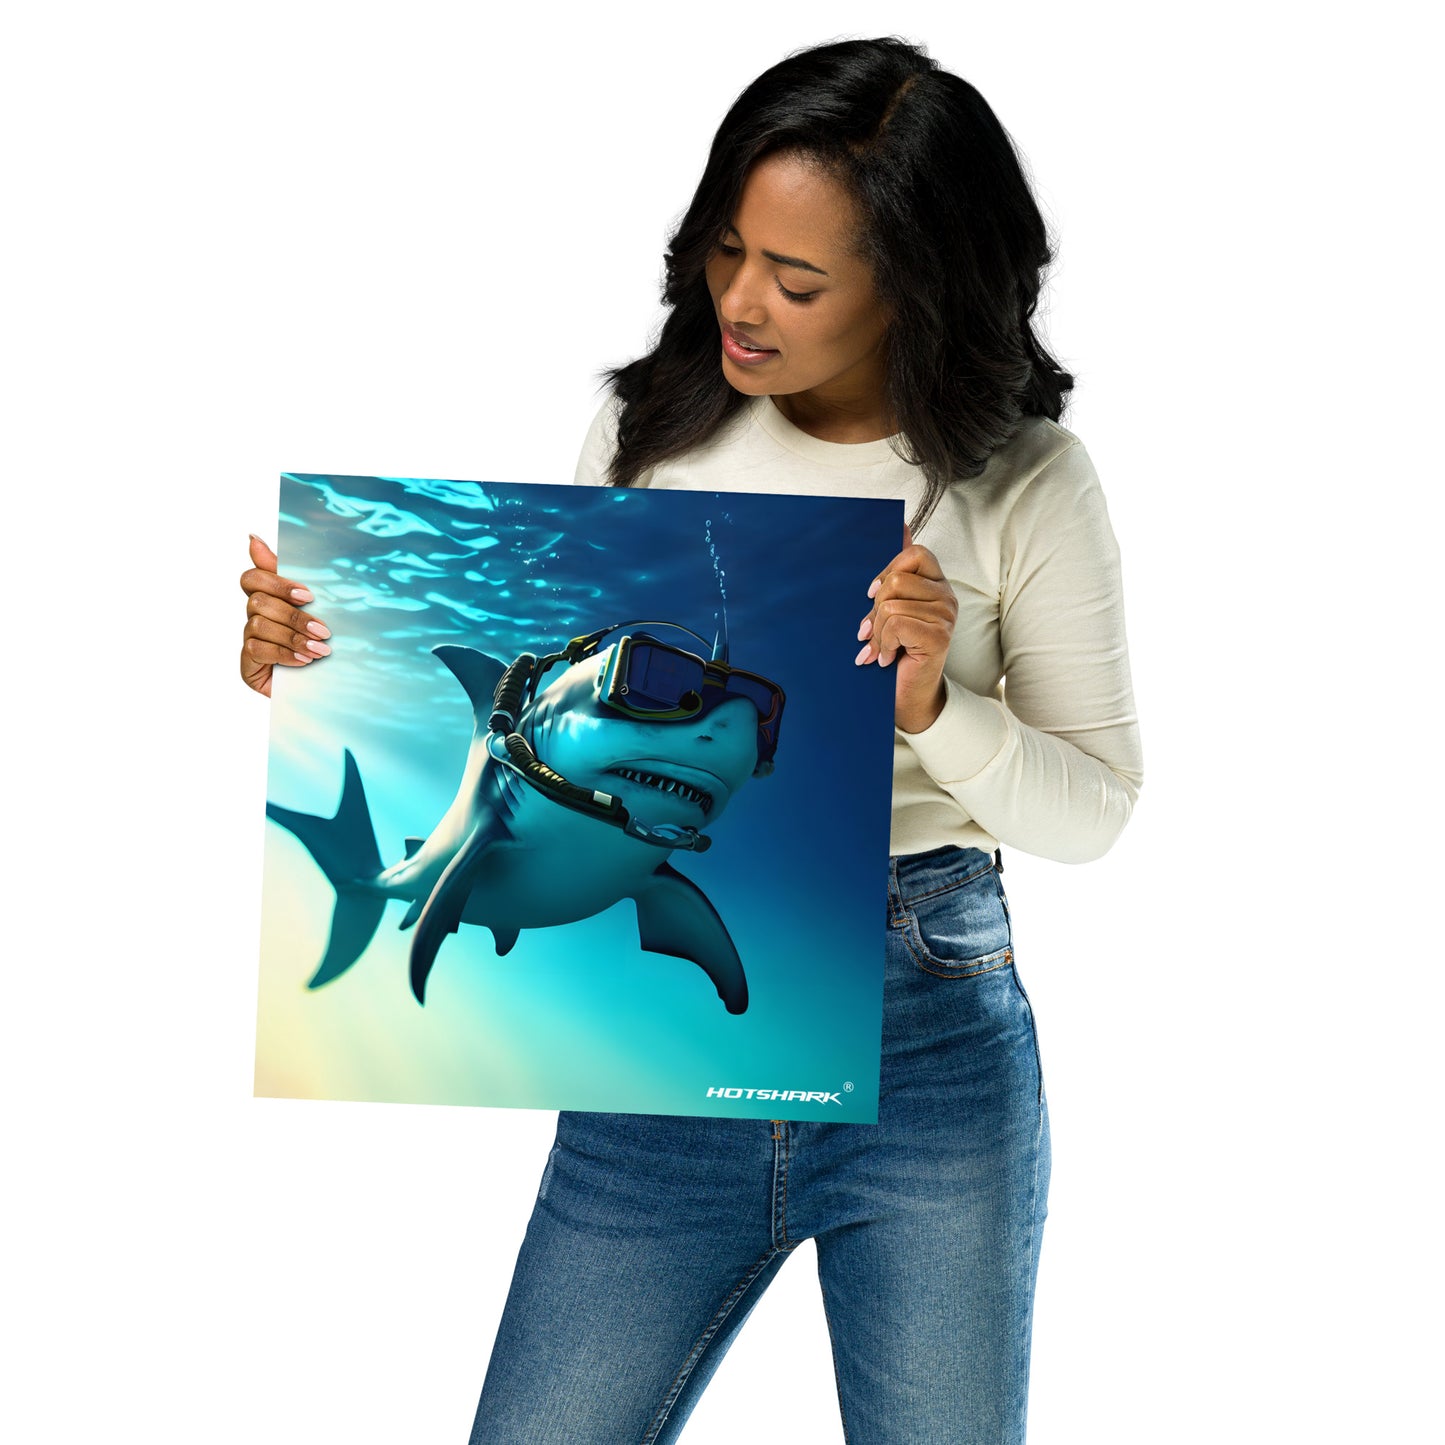 Diver5 Shark - Poster